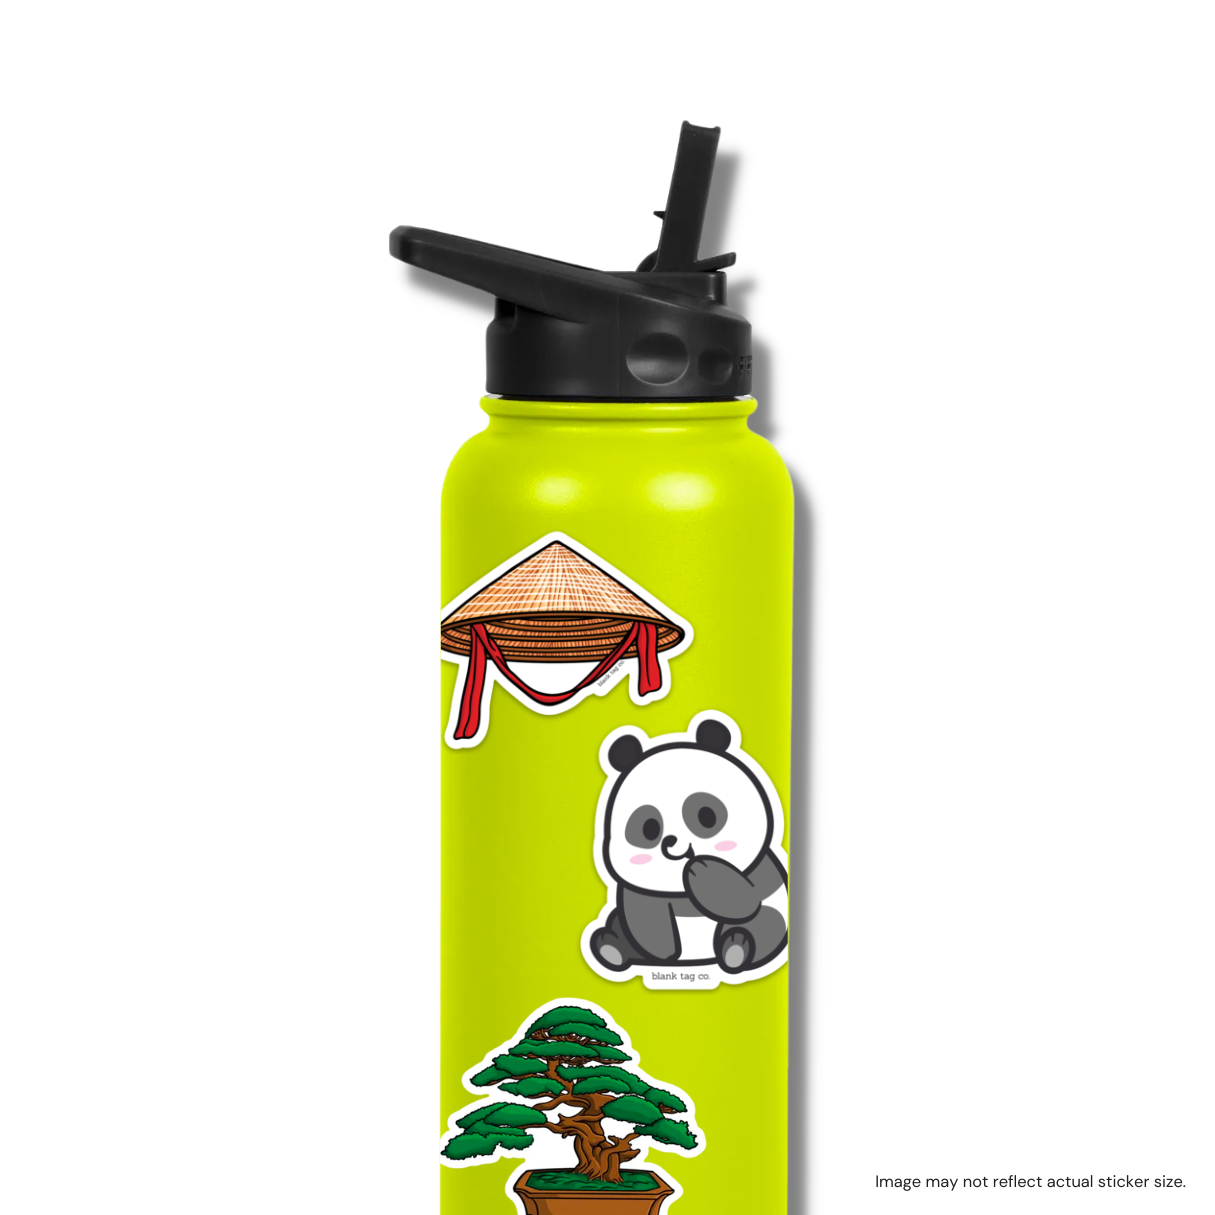 The Bonsai Tree Sticker